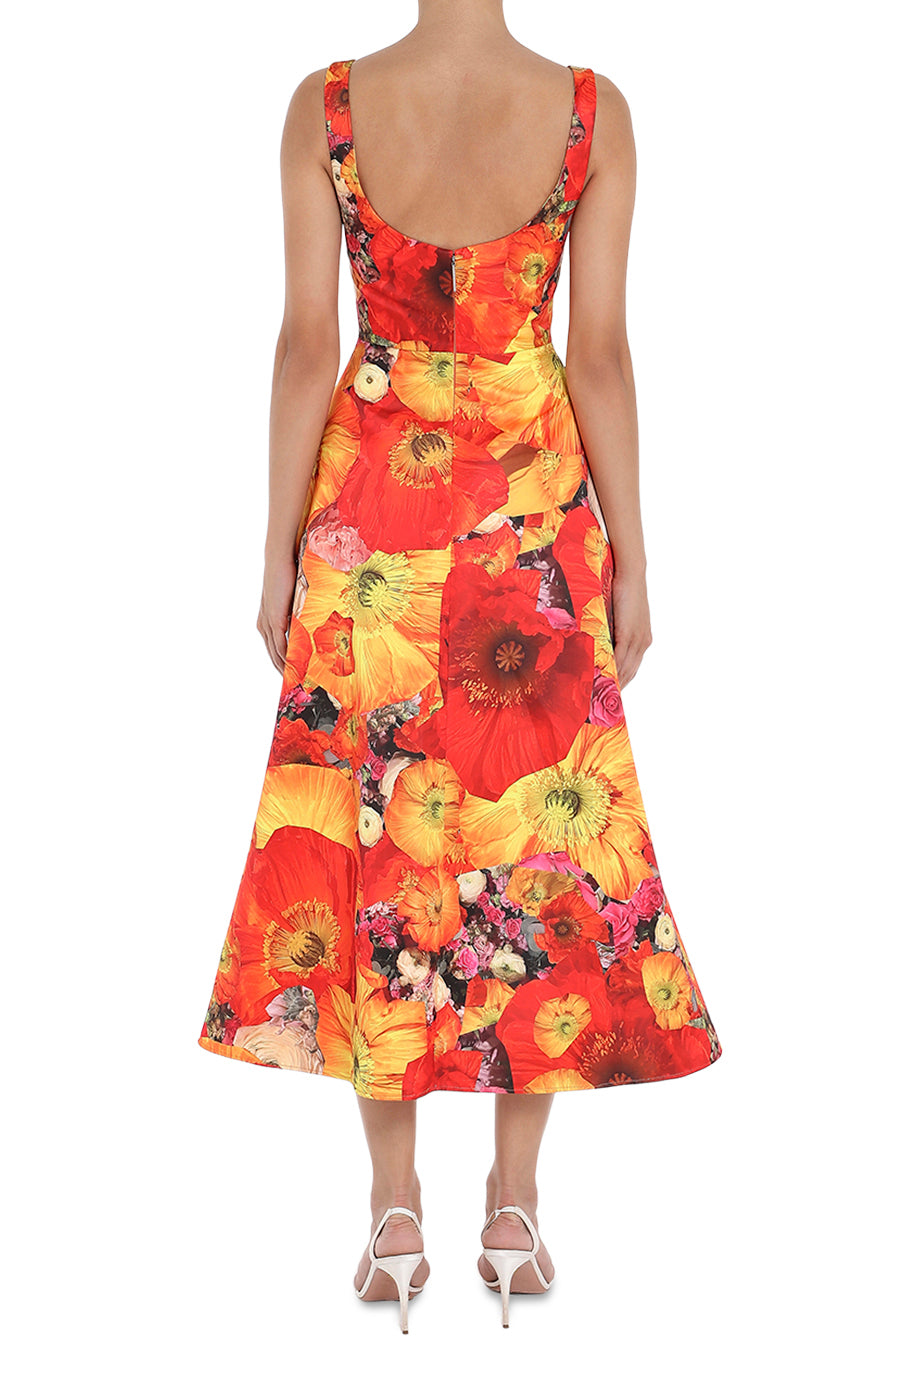 Christopher Kane A-Line Floral Dress in Orange. Back view. Shop from Etoile La Boutique.